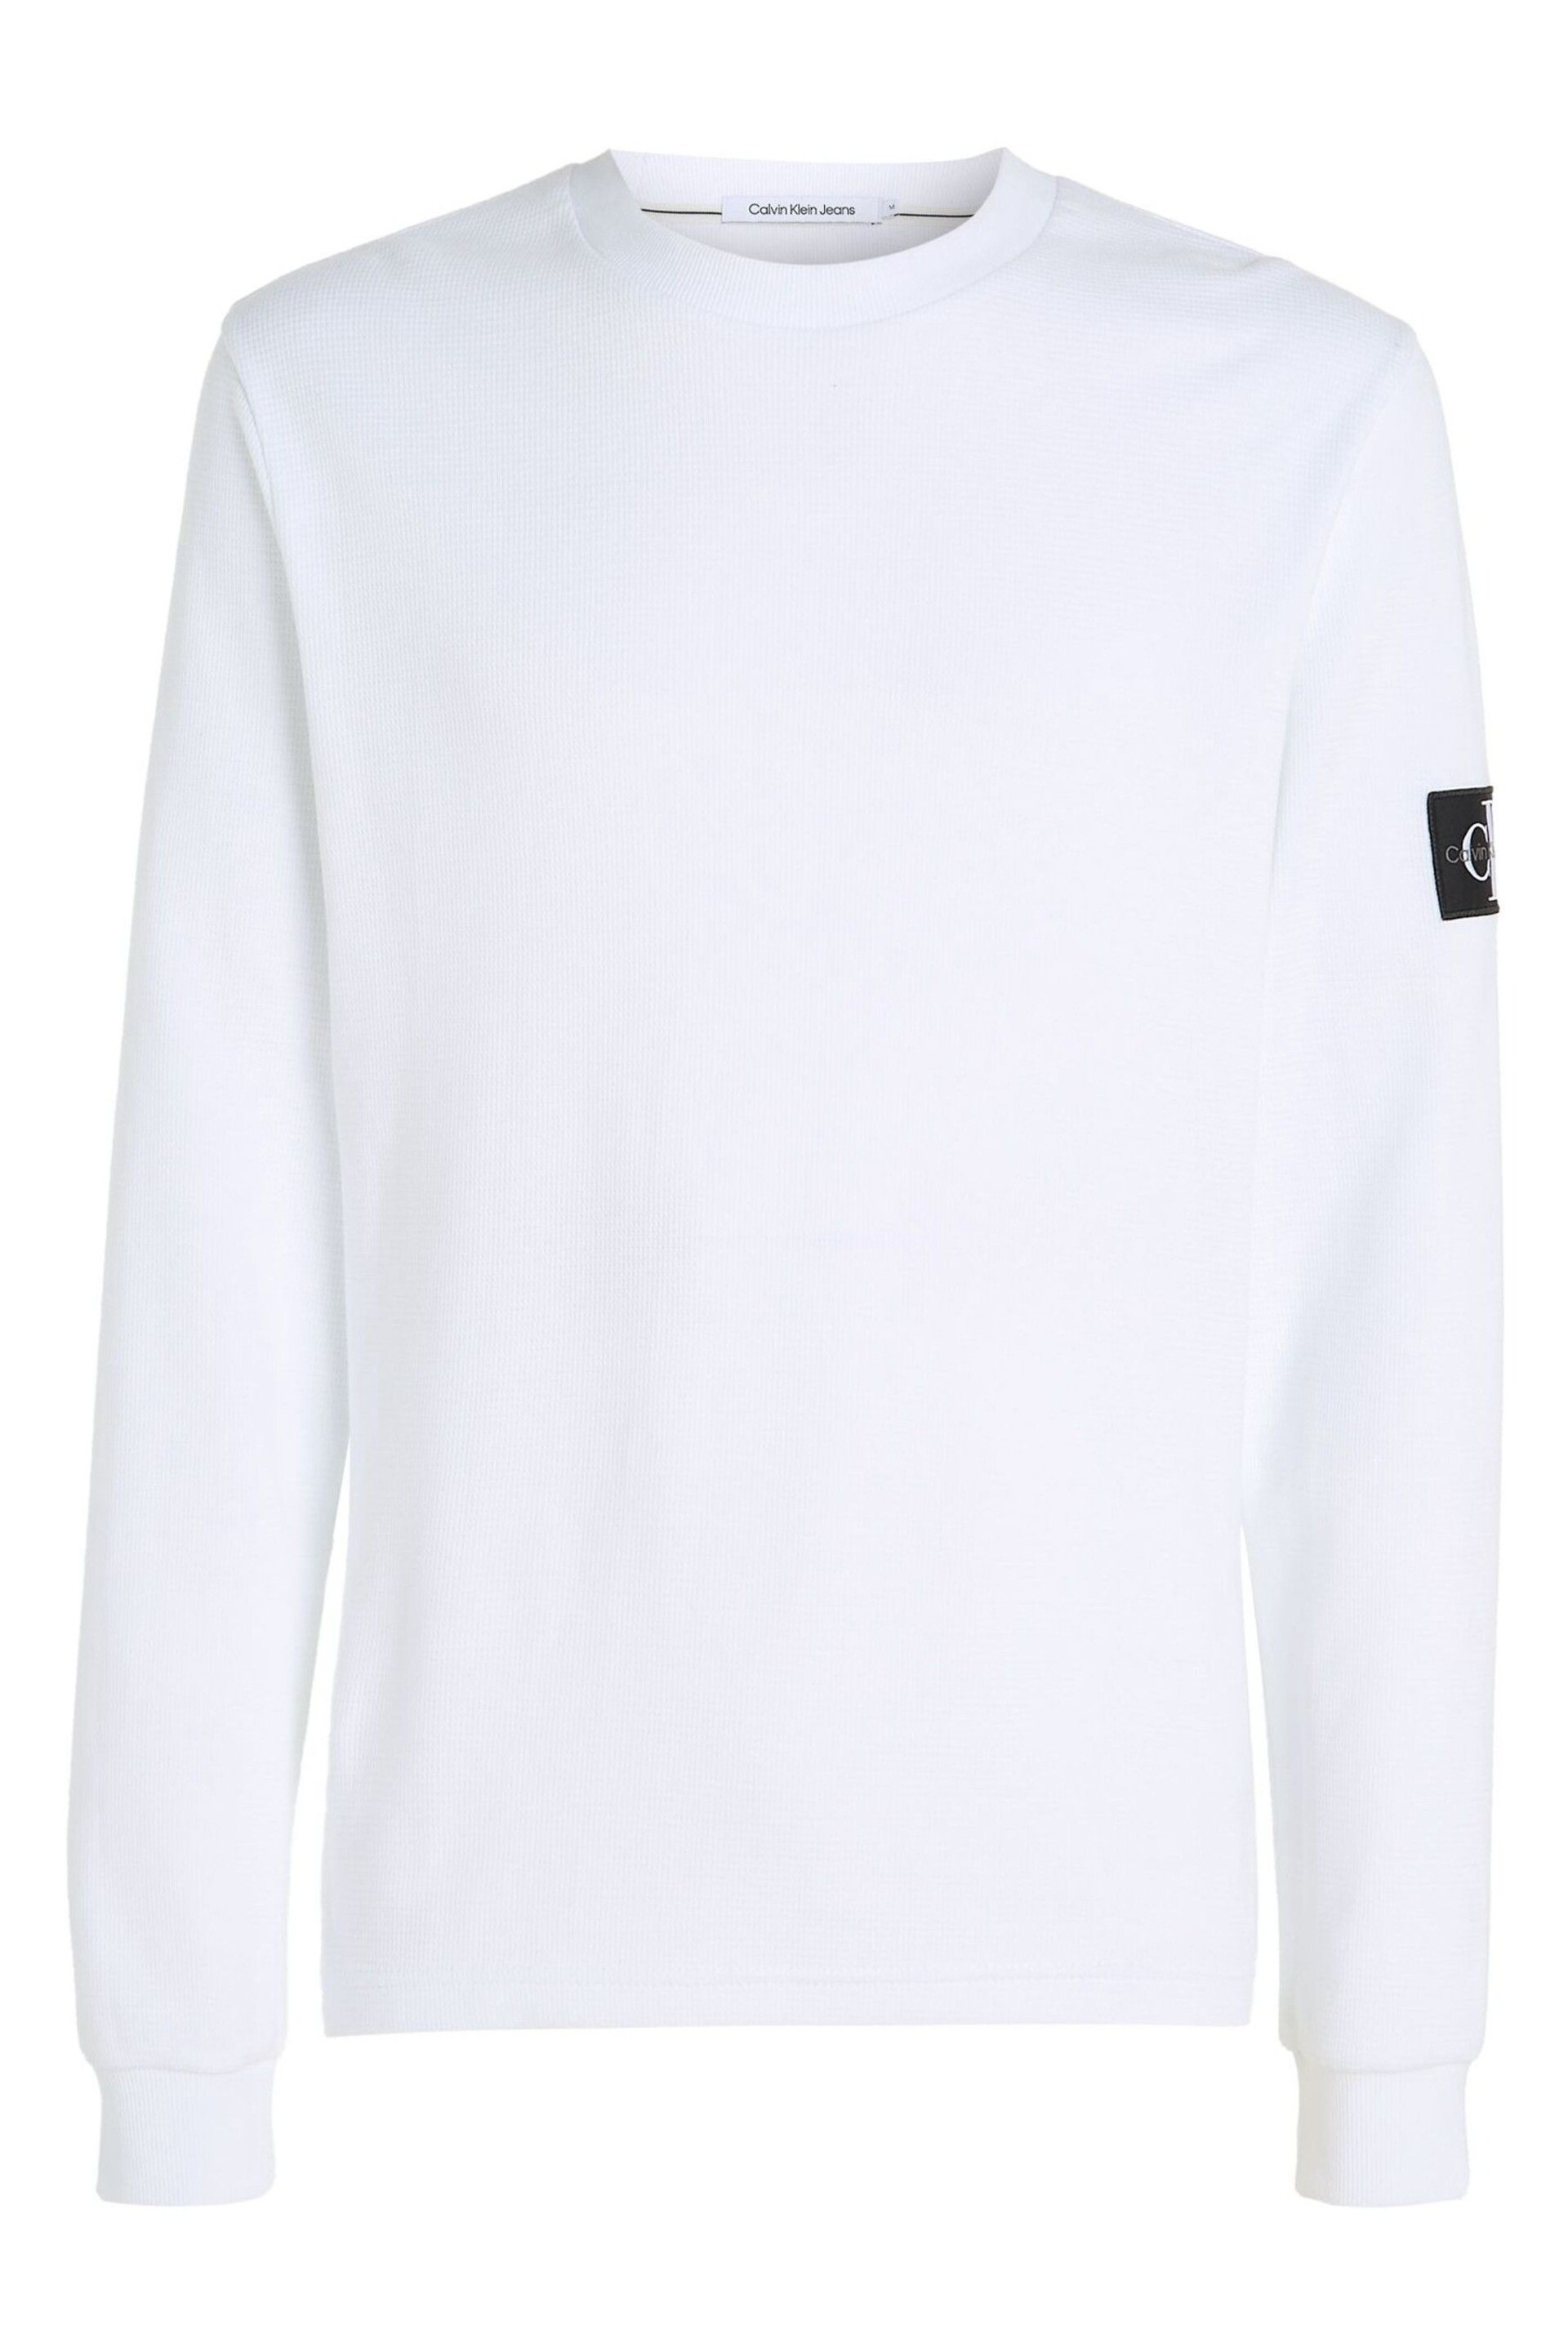 Calvin Klein Jeans Monogram Badge Waffle Long Sleeve White T-Shirt - Image 4 of 6